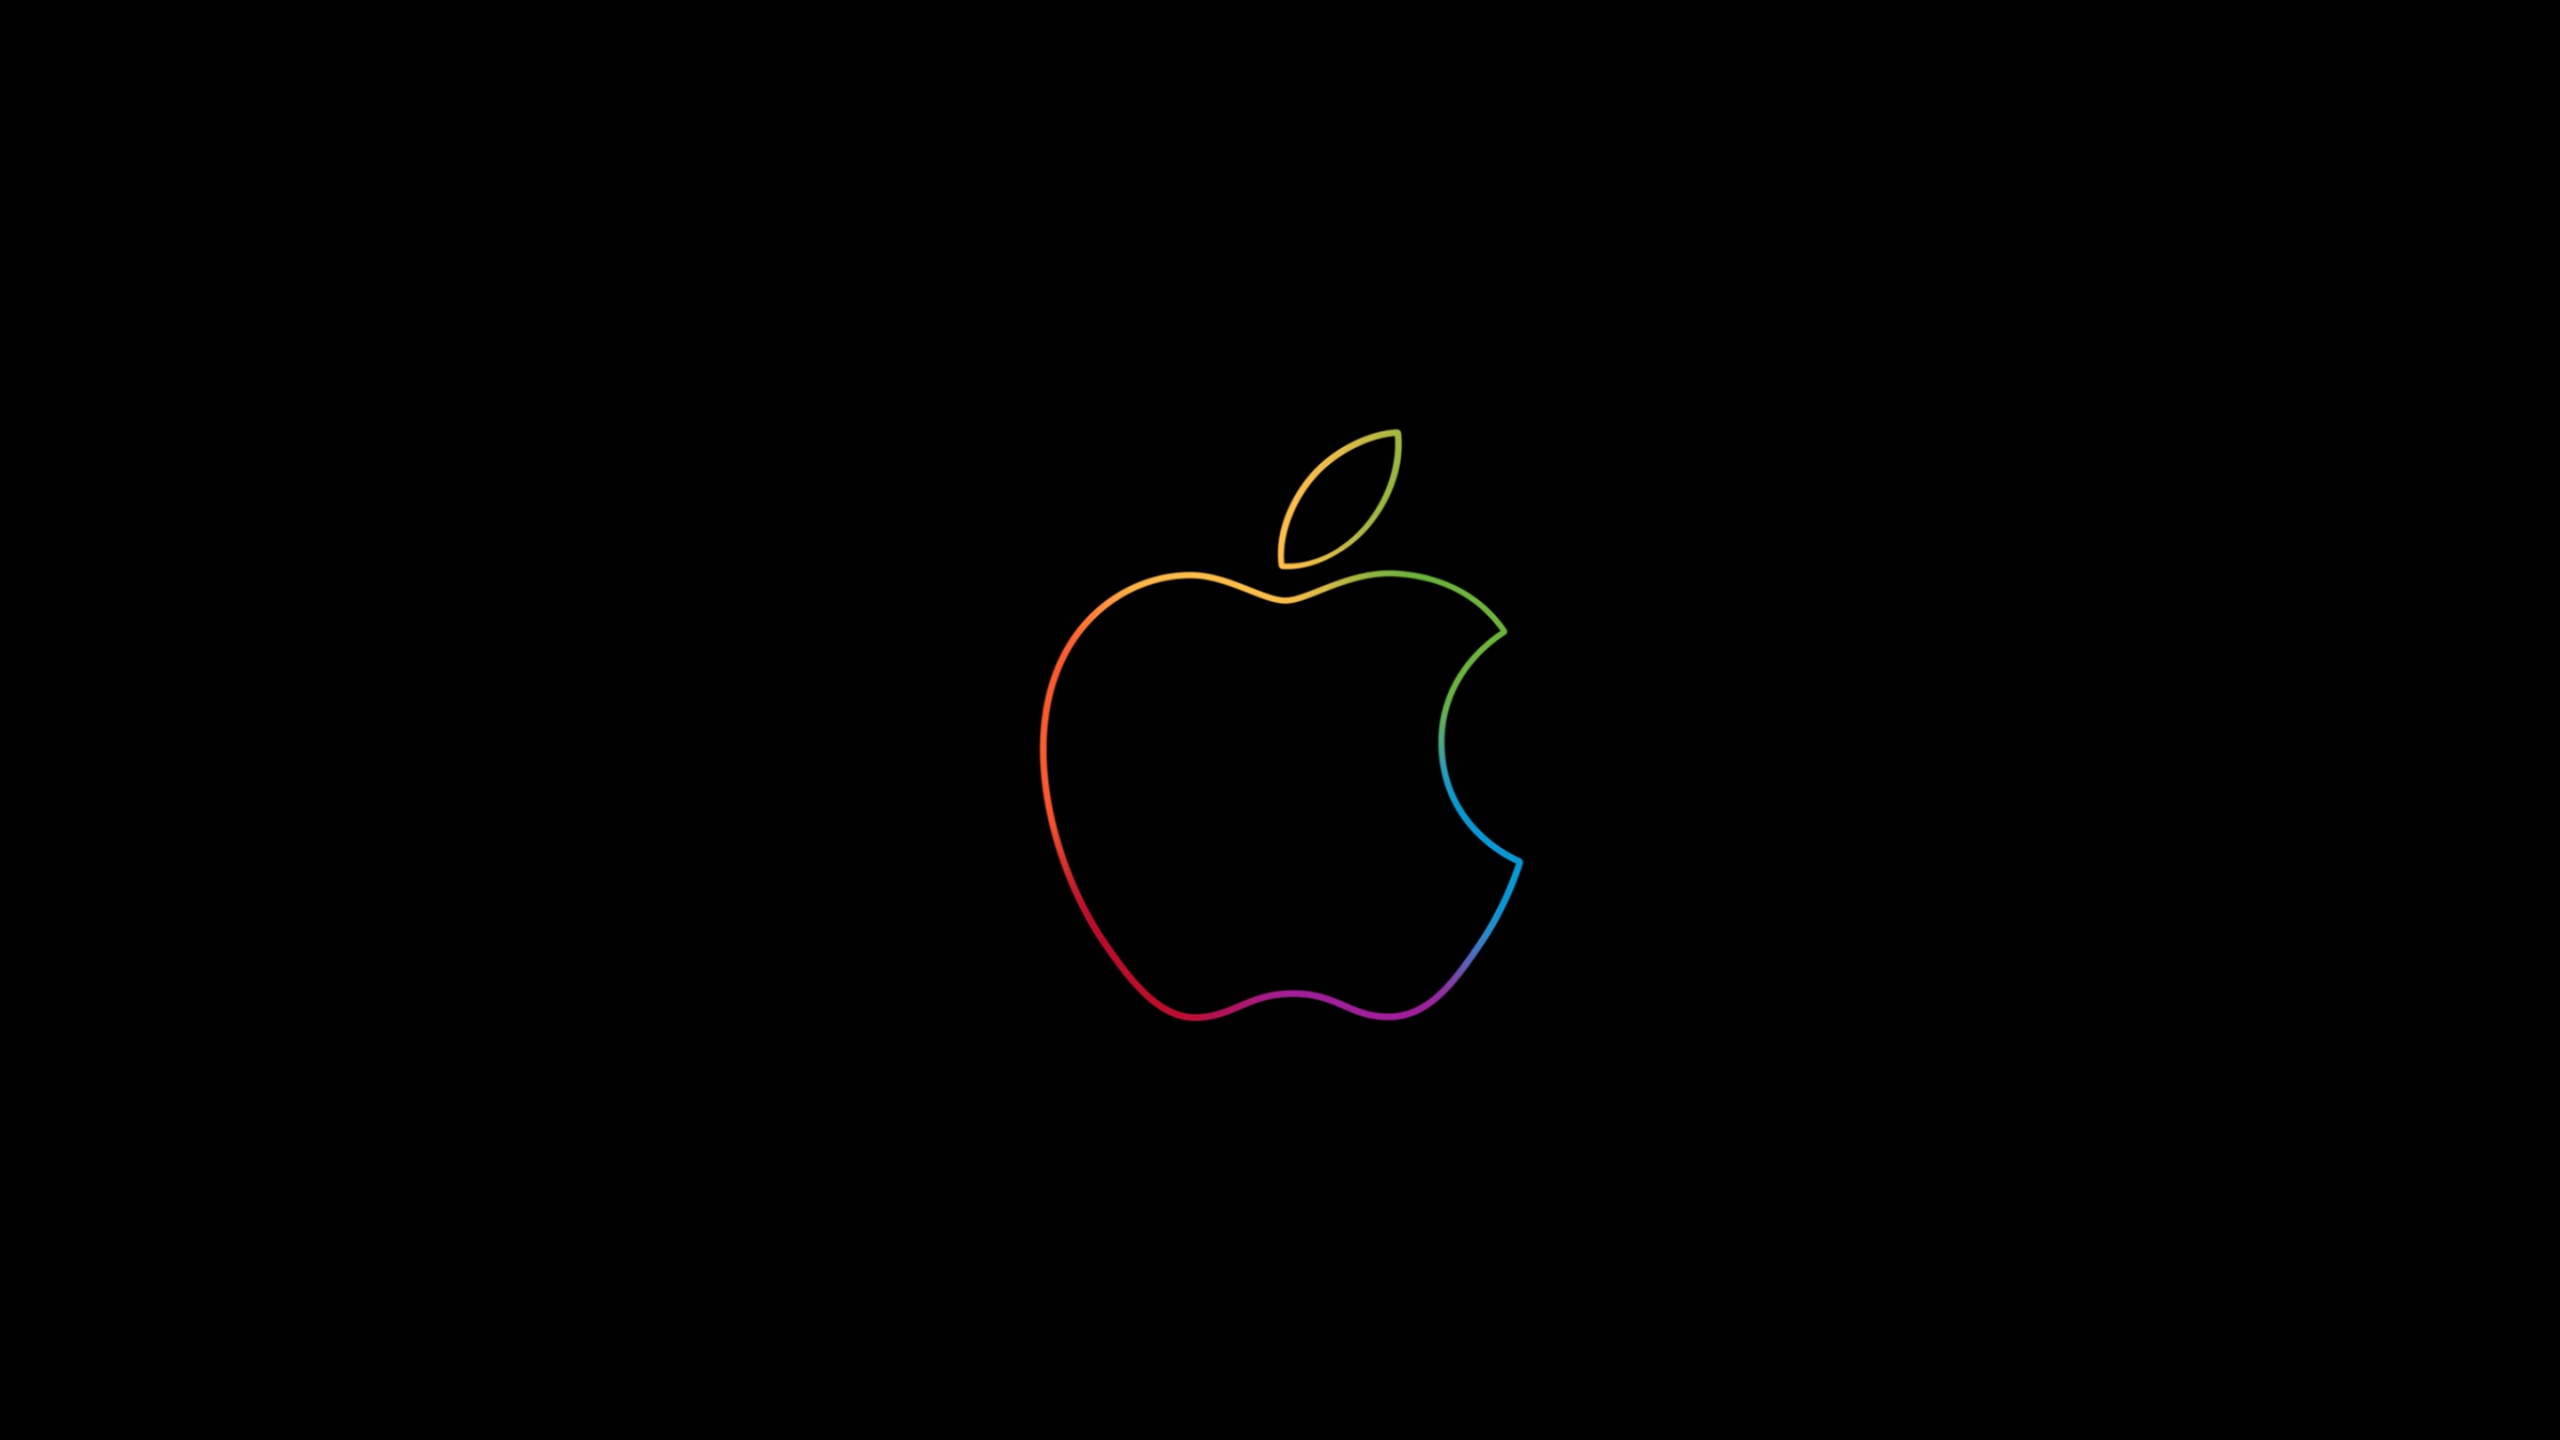 Iphone Wallpaper 4k Apple Logo ~ Apple Logo 4k Wallpapers | Bodenewasurk